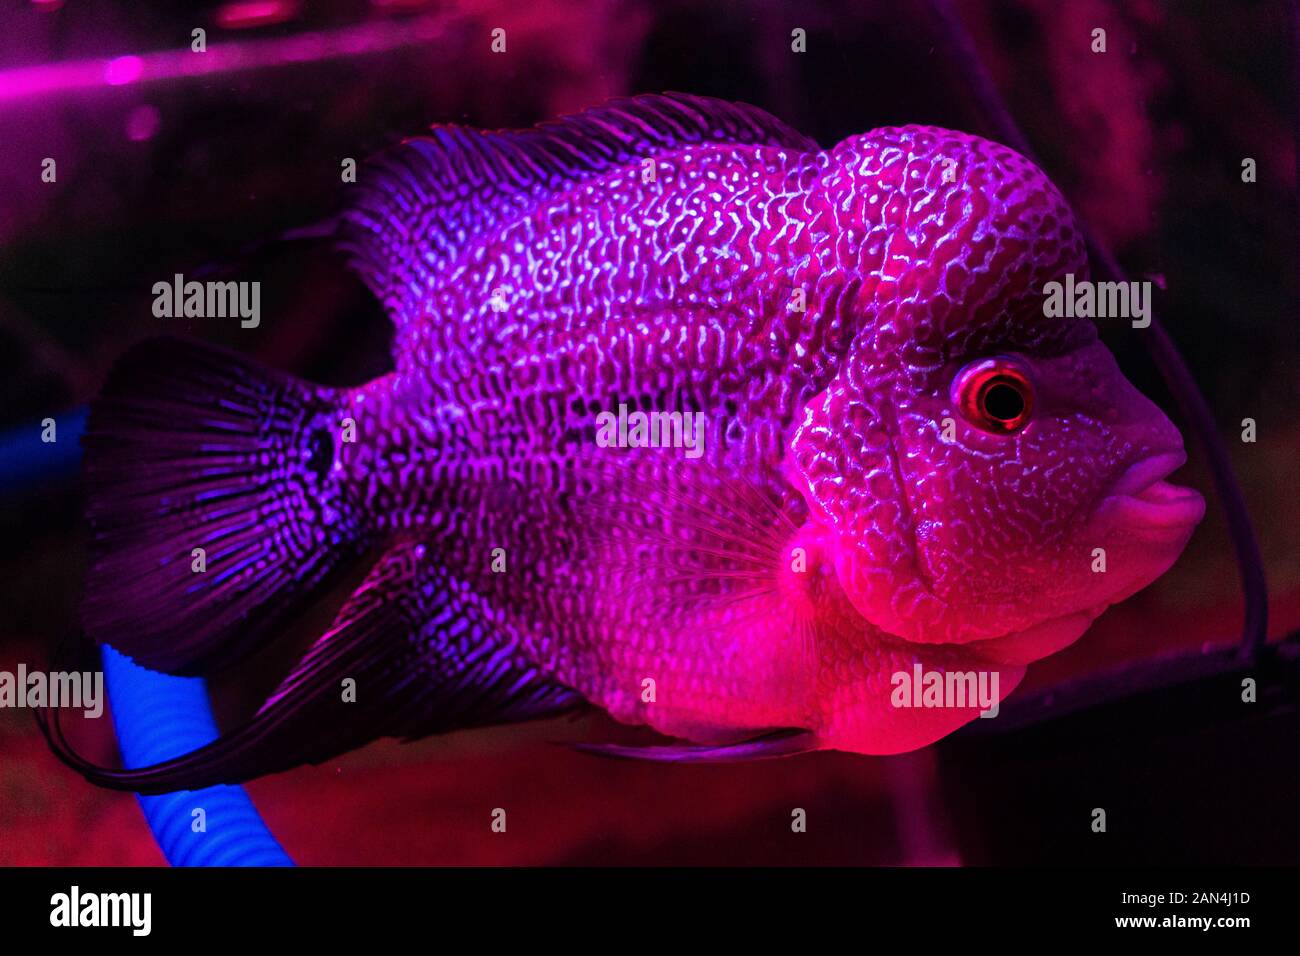 Picture of Flowerhorn Fish (Flowerhorn cichlid) Stock Photo